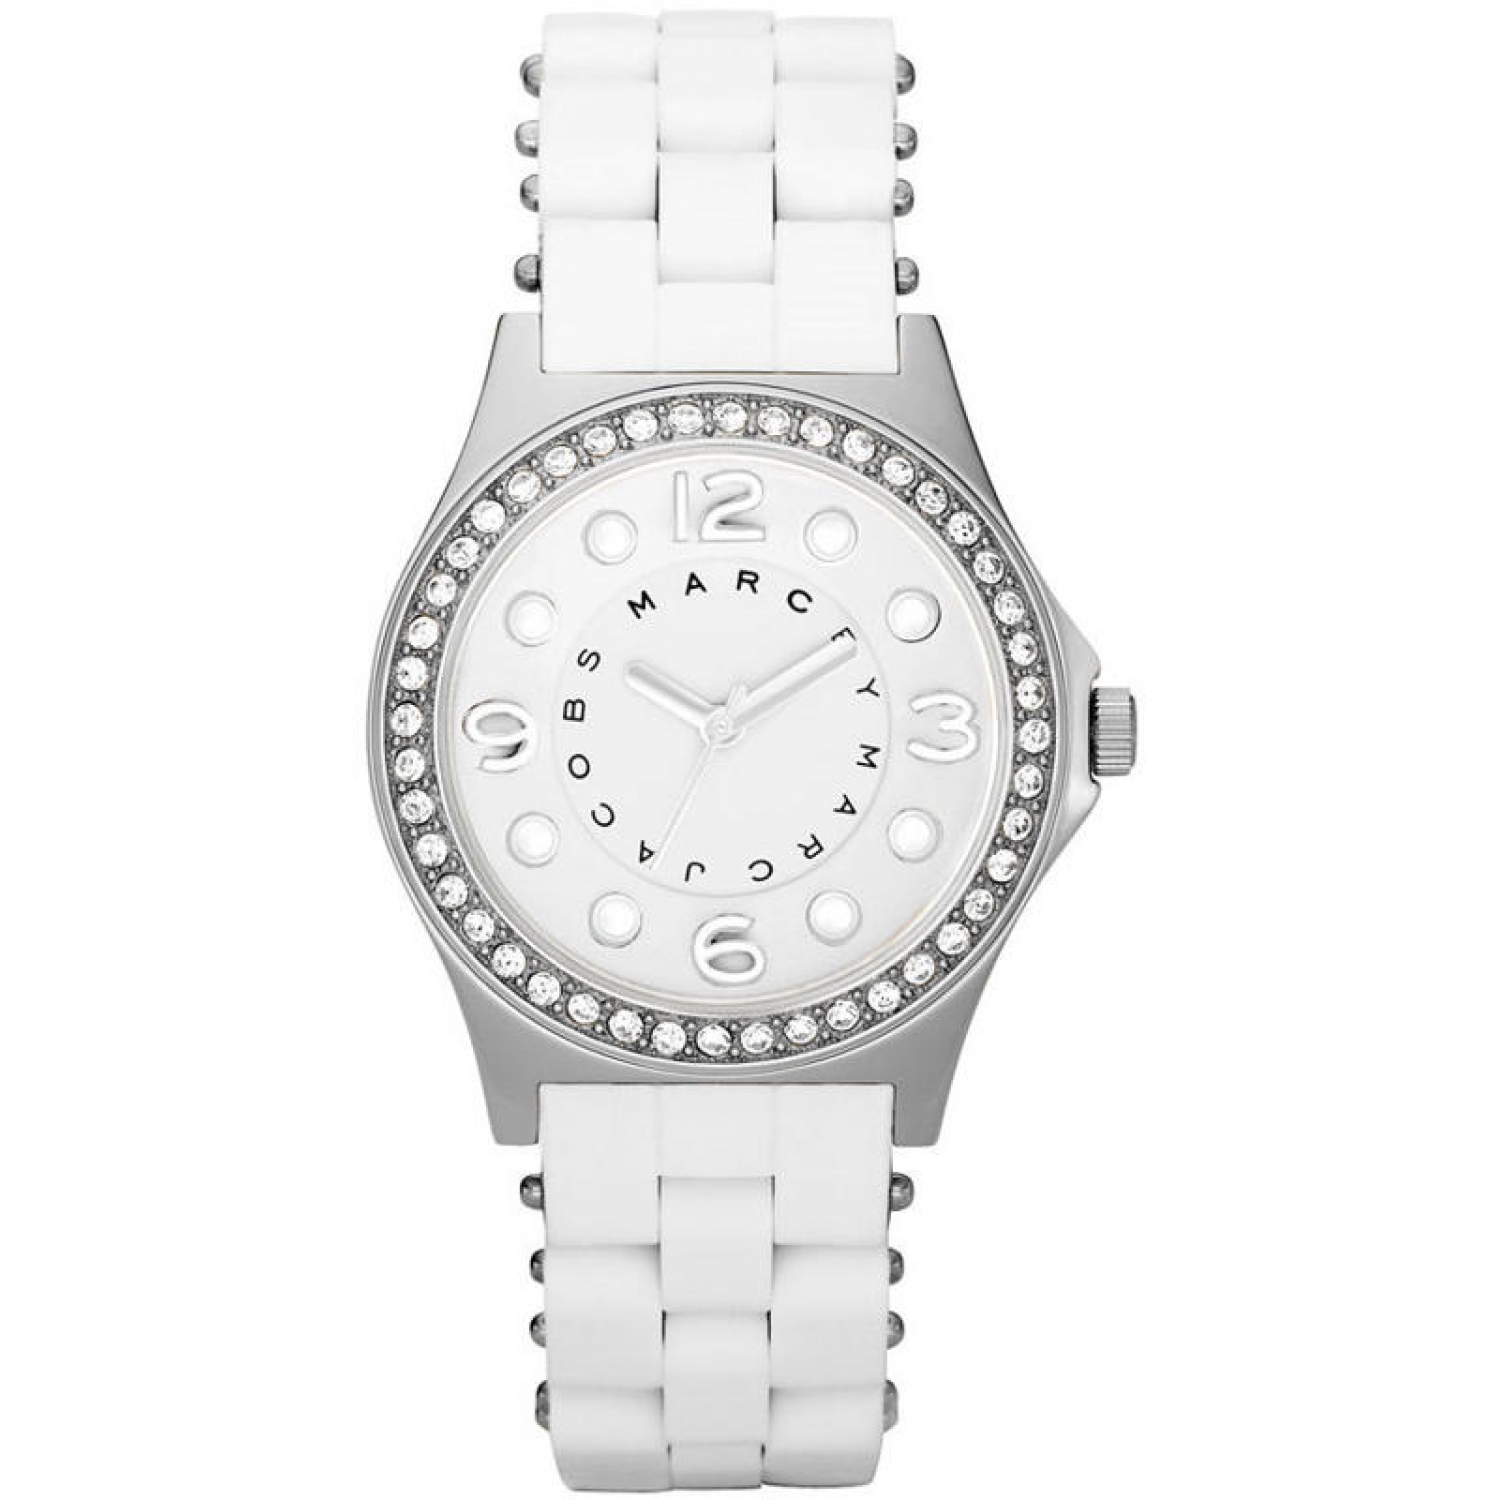 MARC BY MARC JACOBS MBM2535 白色鑲鑽石英手錶   特價$147.99包郵 